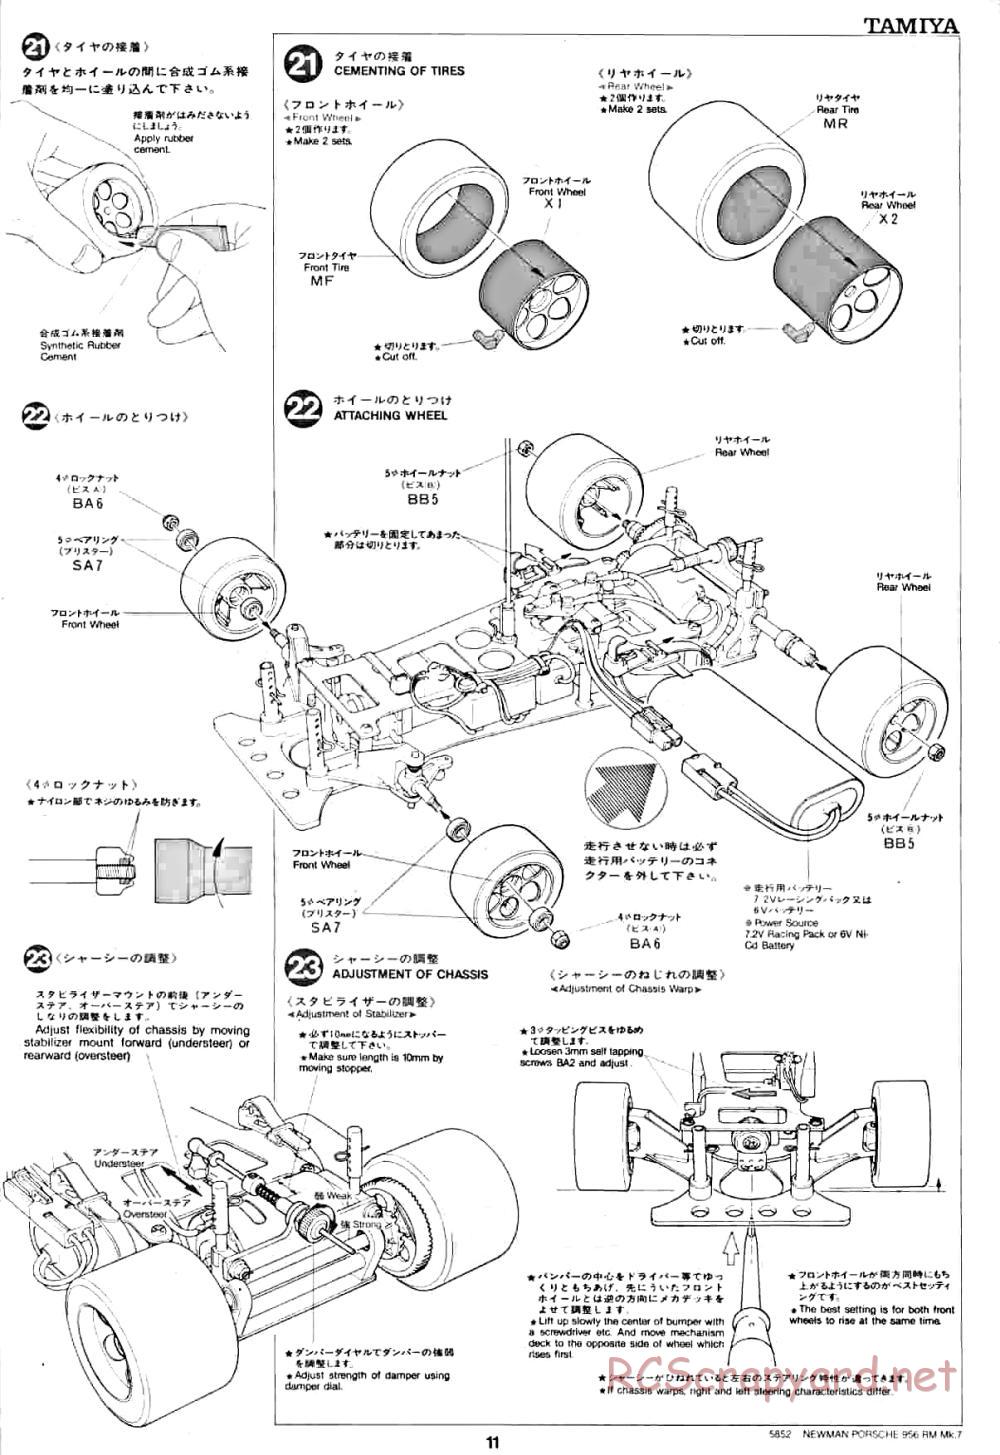 Tamiya - Newman Prsch 956 - RM MK.7 - 58052 - Manual - Page 11